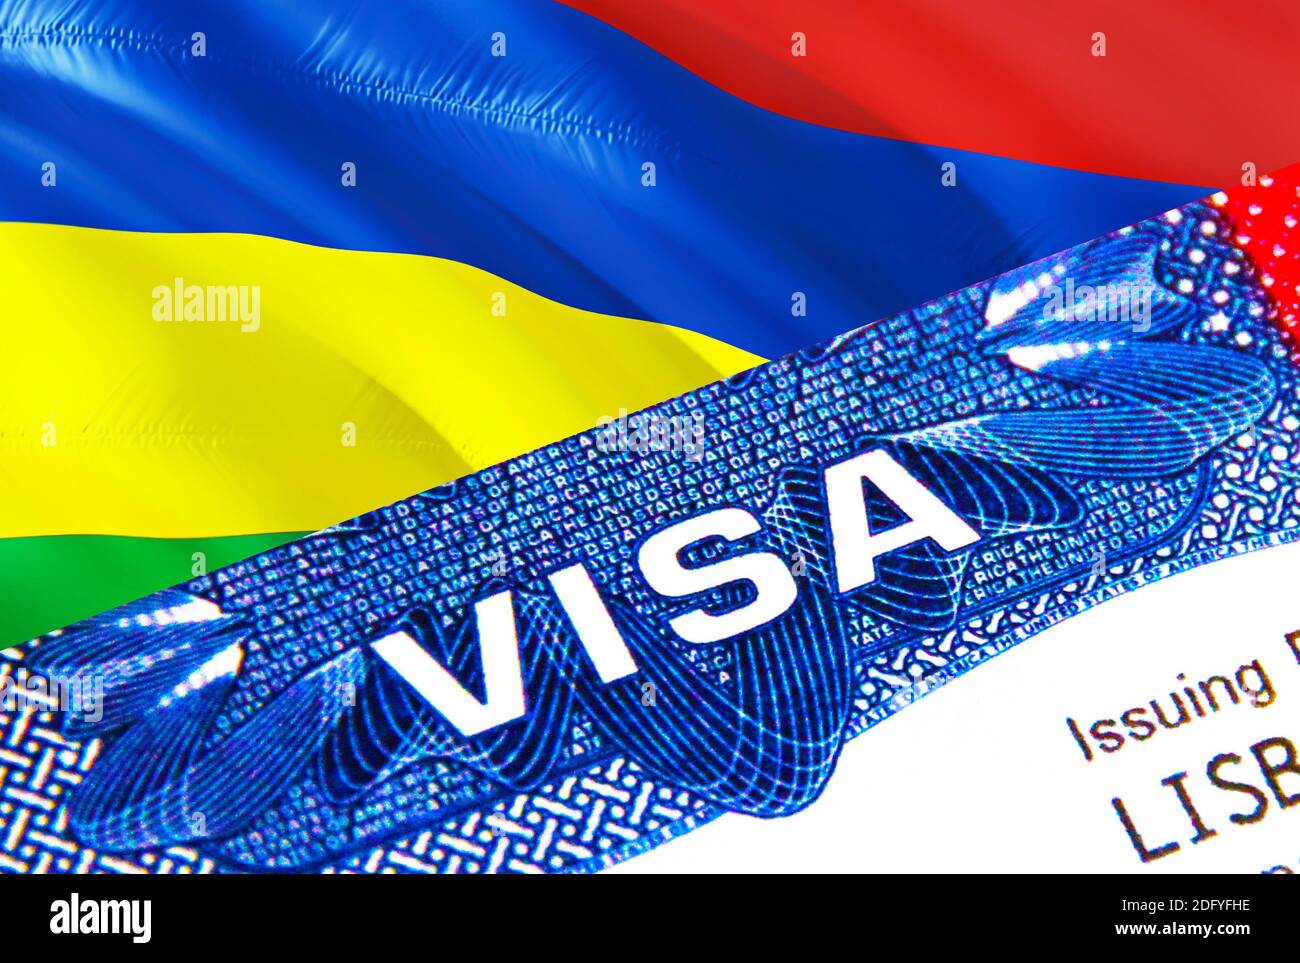 Mauritius Visa in passport. USA immigration Visa for Mauritius citizens  focusing on word VISA. Travel Mauritius visa in national identification  close Stock Photo - Alamy